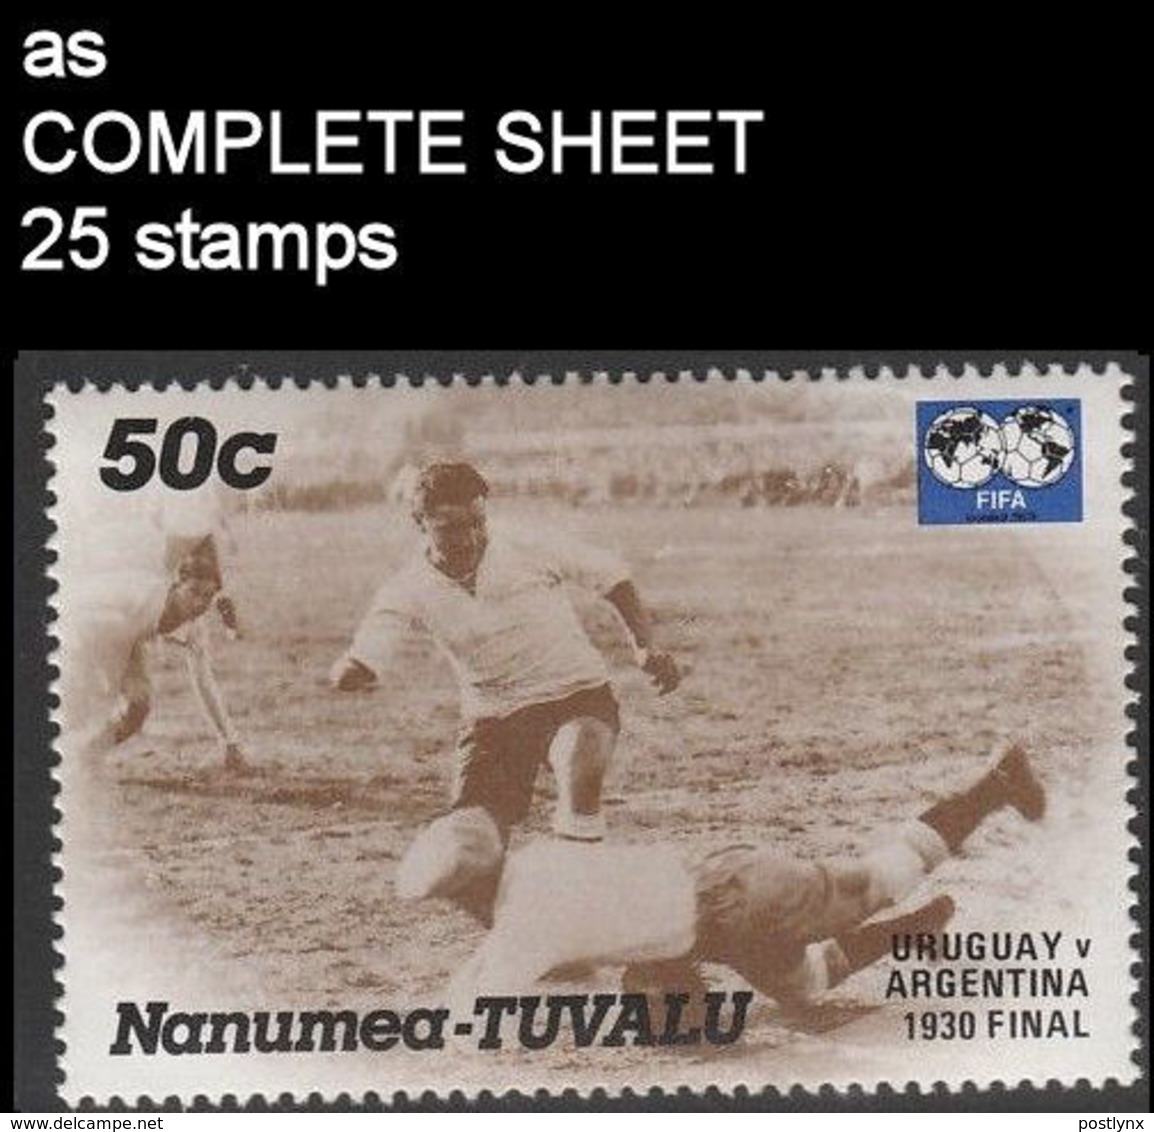 CV:€8.90 TUVALU-Nanumea 1986 World Cup Mexico Final Uruguay Argentina 1930 1930 50c COMPLETE SHEET:25 Stamps - 1930 – Uruguay